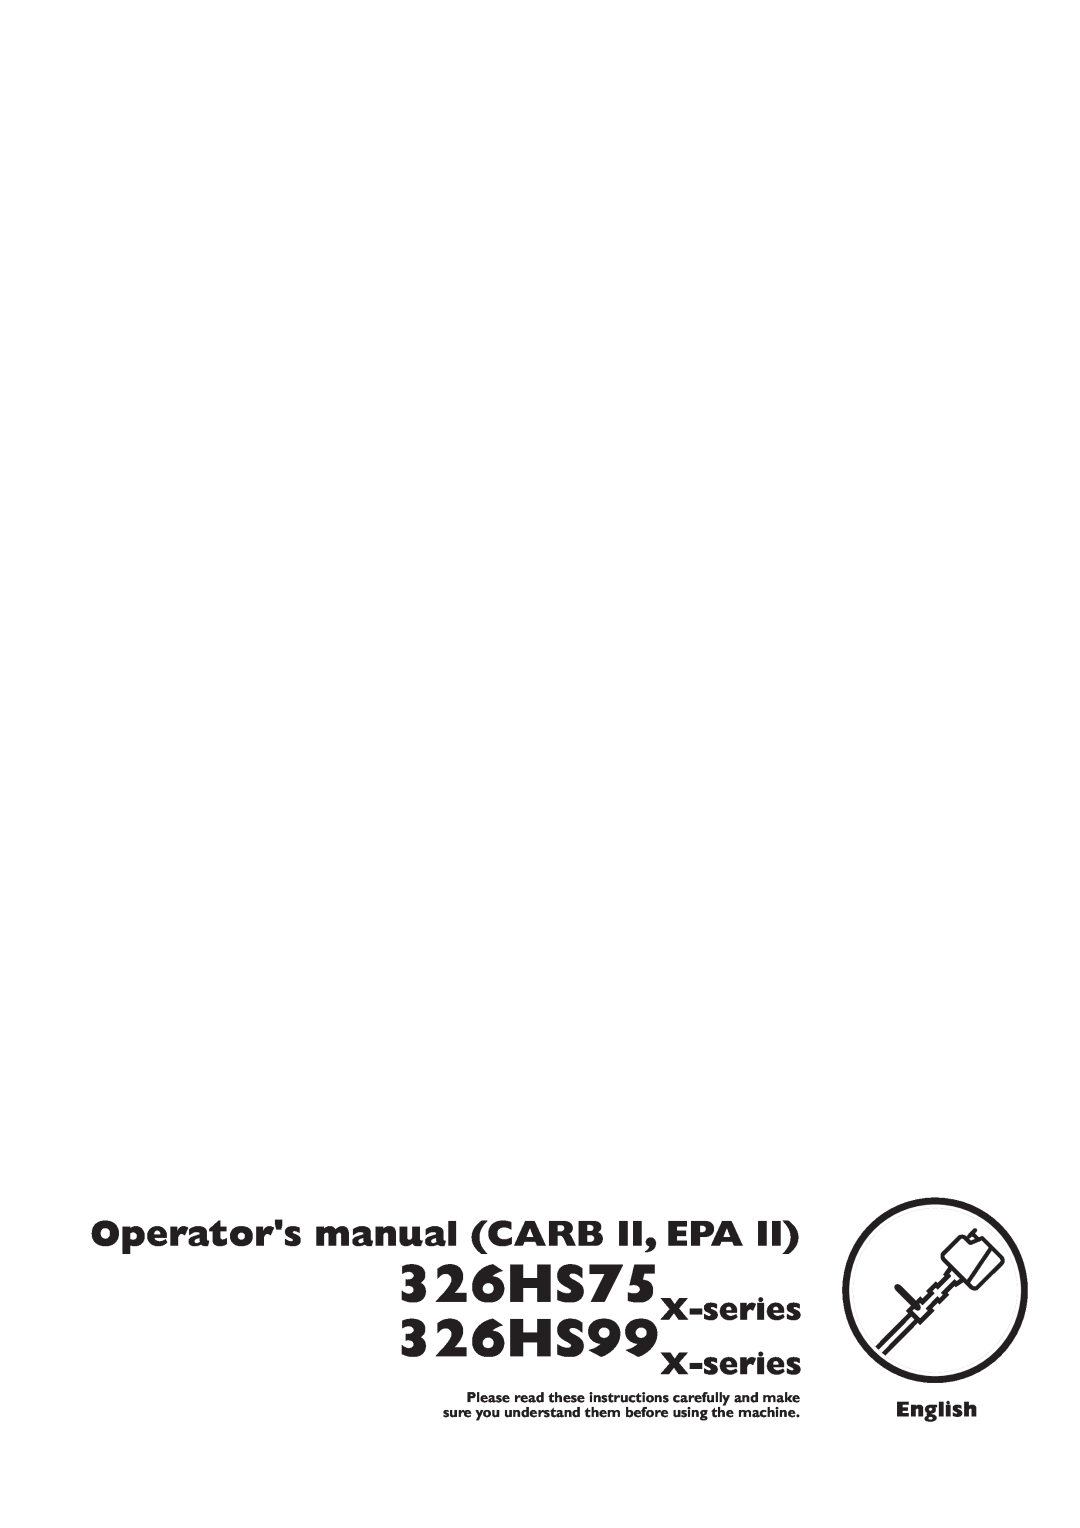 Husqvarna manual Operators manual CARB II, EPA, 326HS75X-series 326HS99X-series 